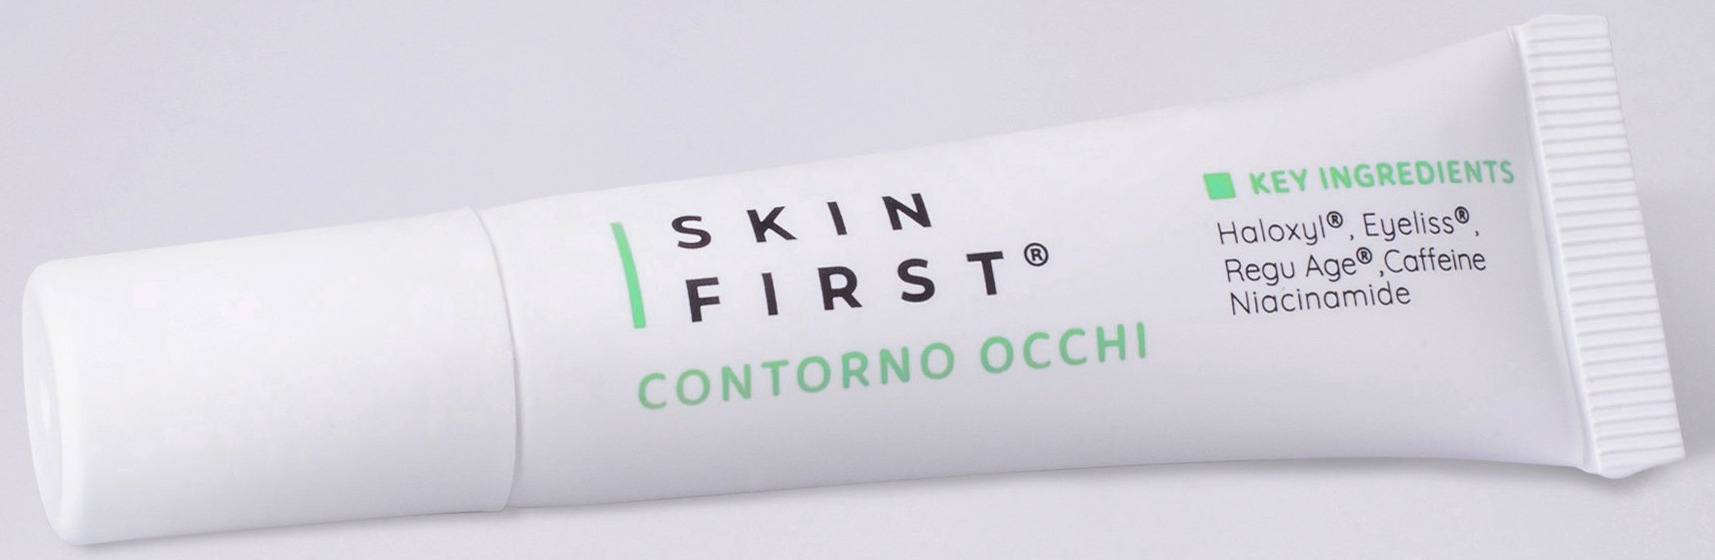 Skin first Contorno Occhi